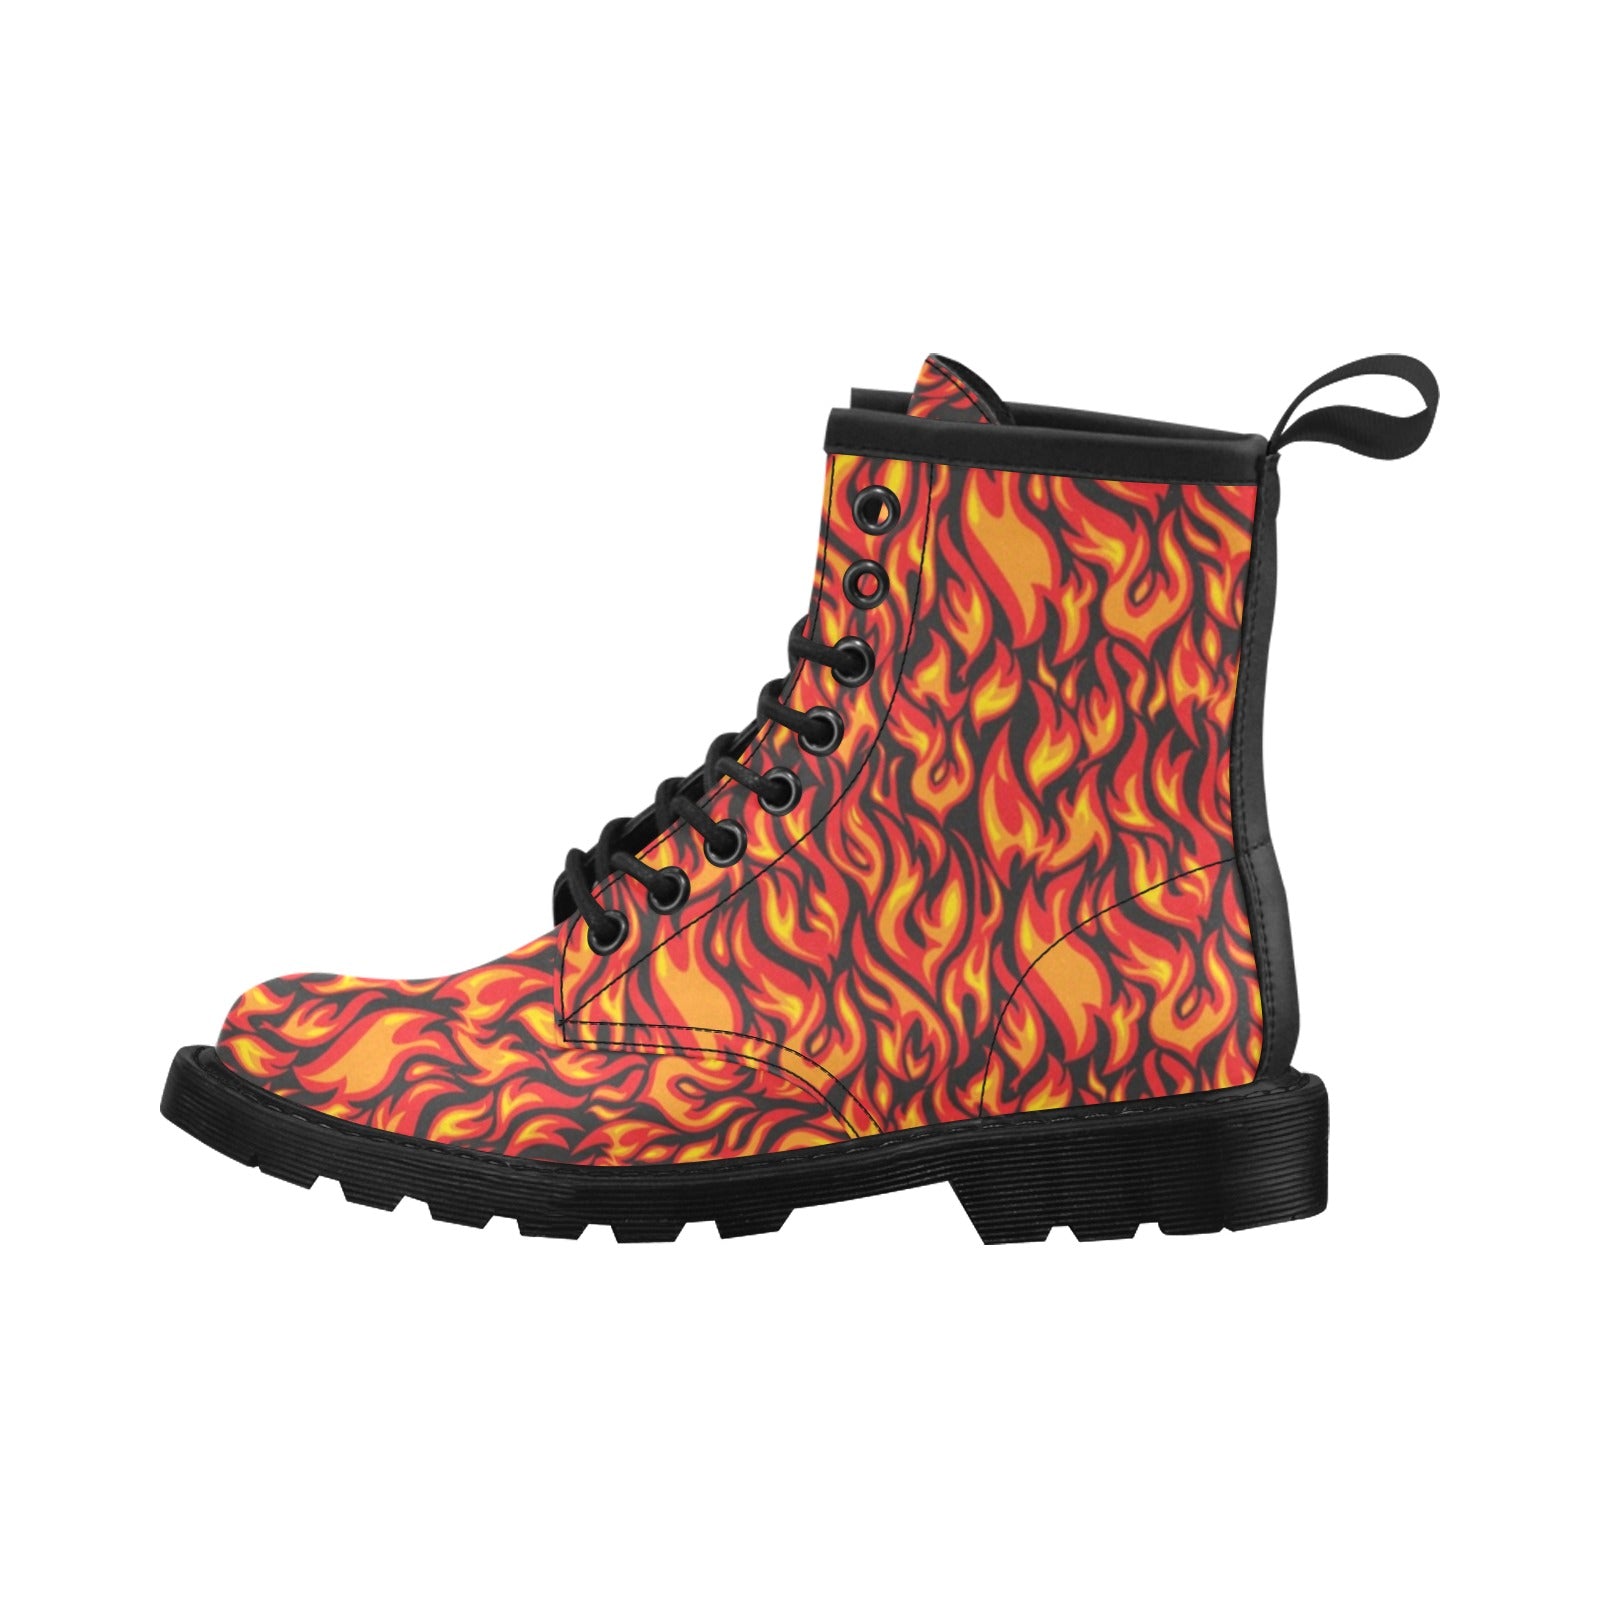 Flame Fire Print Pattern Women's Boots